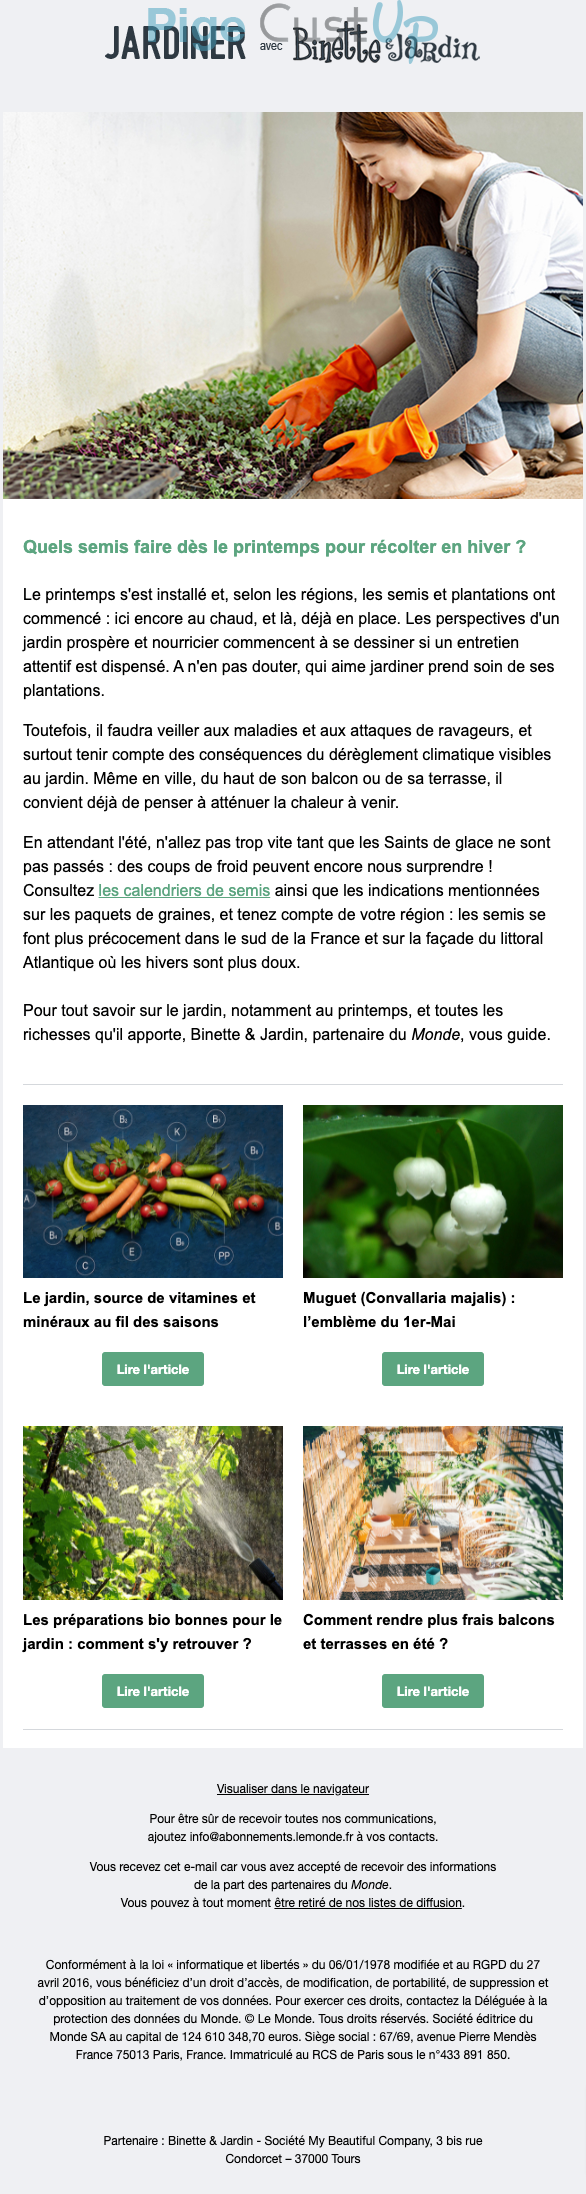 Exemple de Type de media   - Le Monde.fr - Marketing relationnel - Newsletter